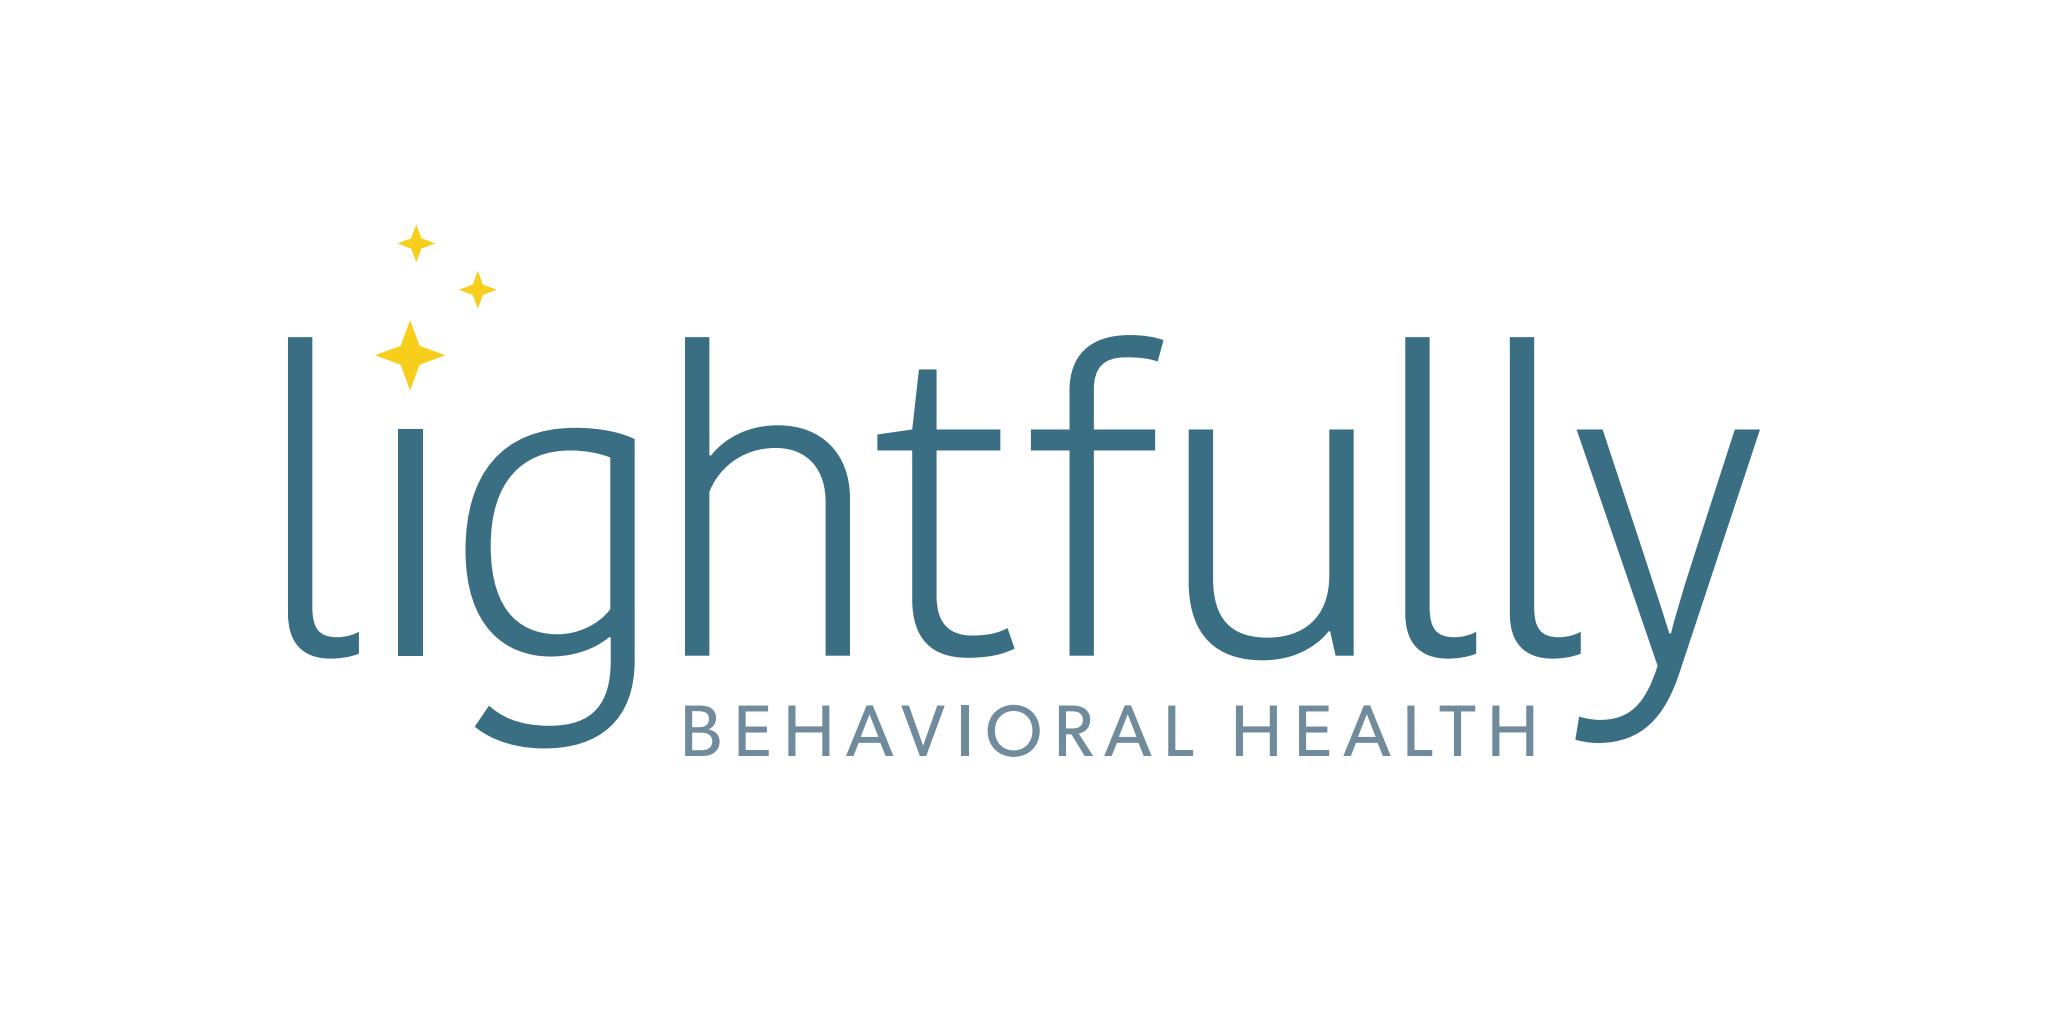 Lightfully Behavioral Health